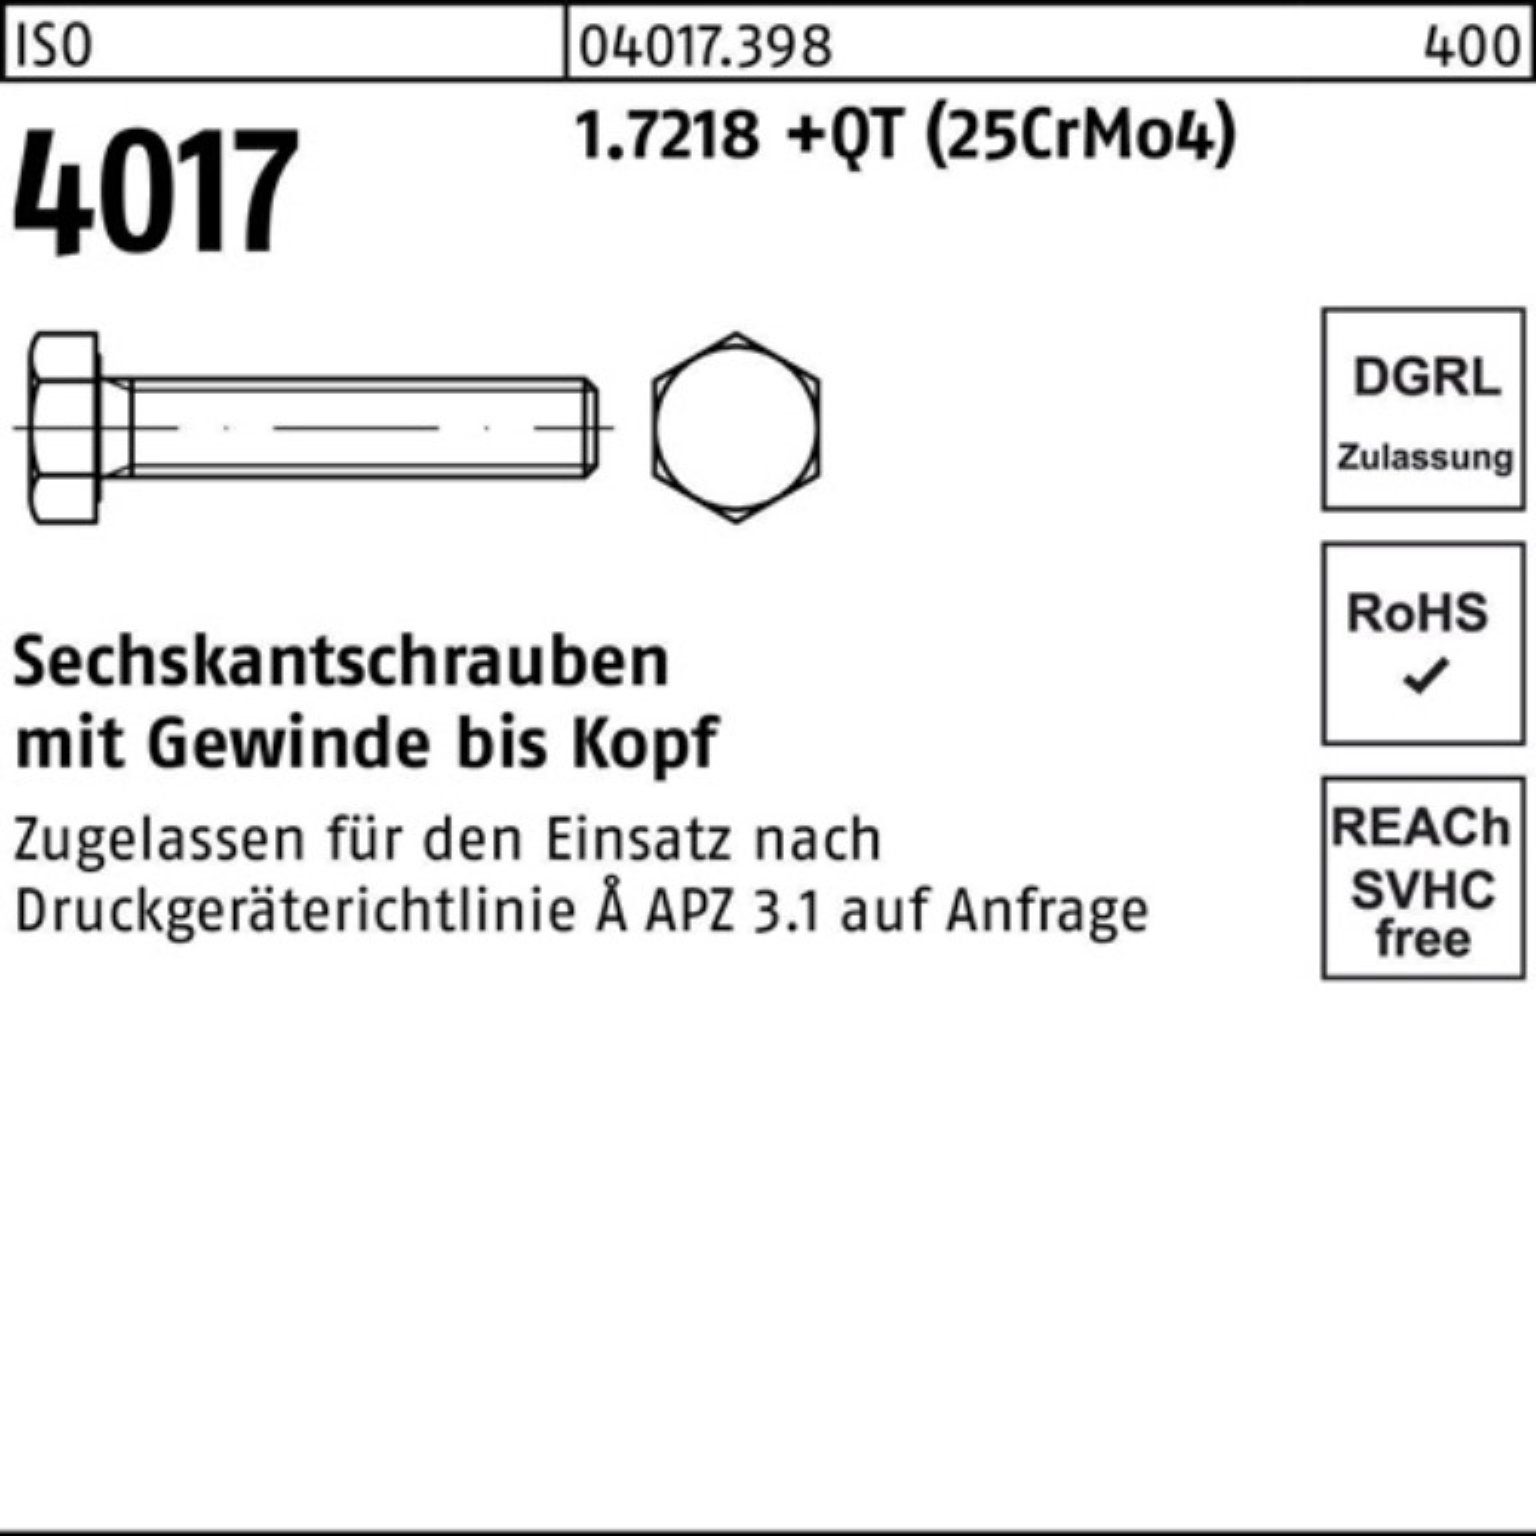 +QT Sechskantschraube Sechskantschraube VG 1.7218 M33x 4017 100er 90 Pack (25CrMo4) ISO Bufab